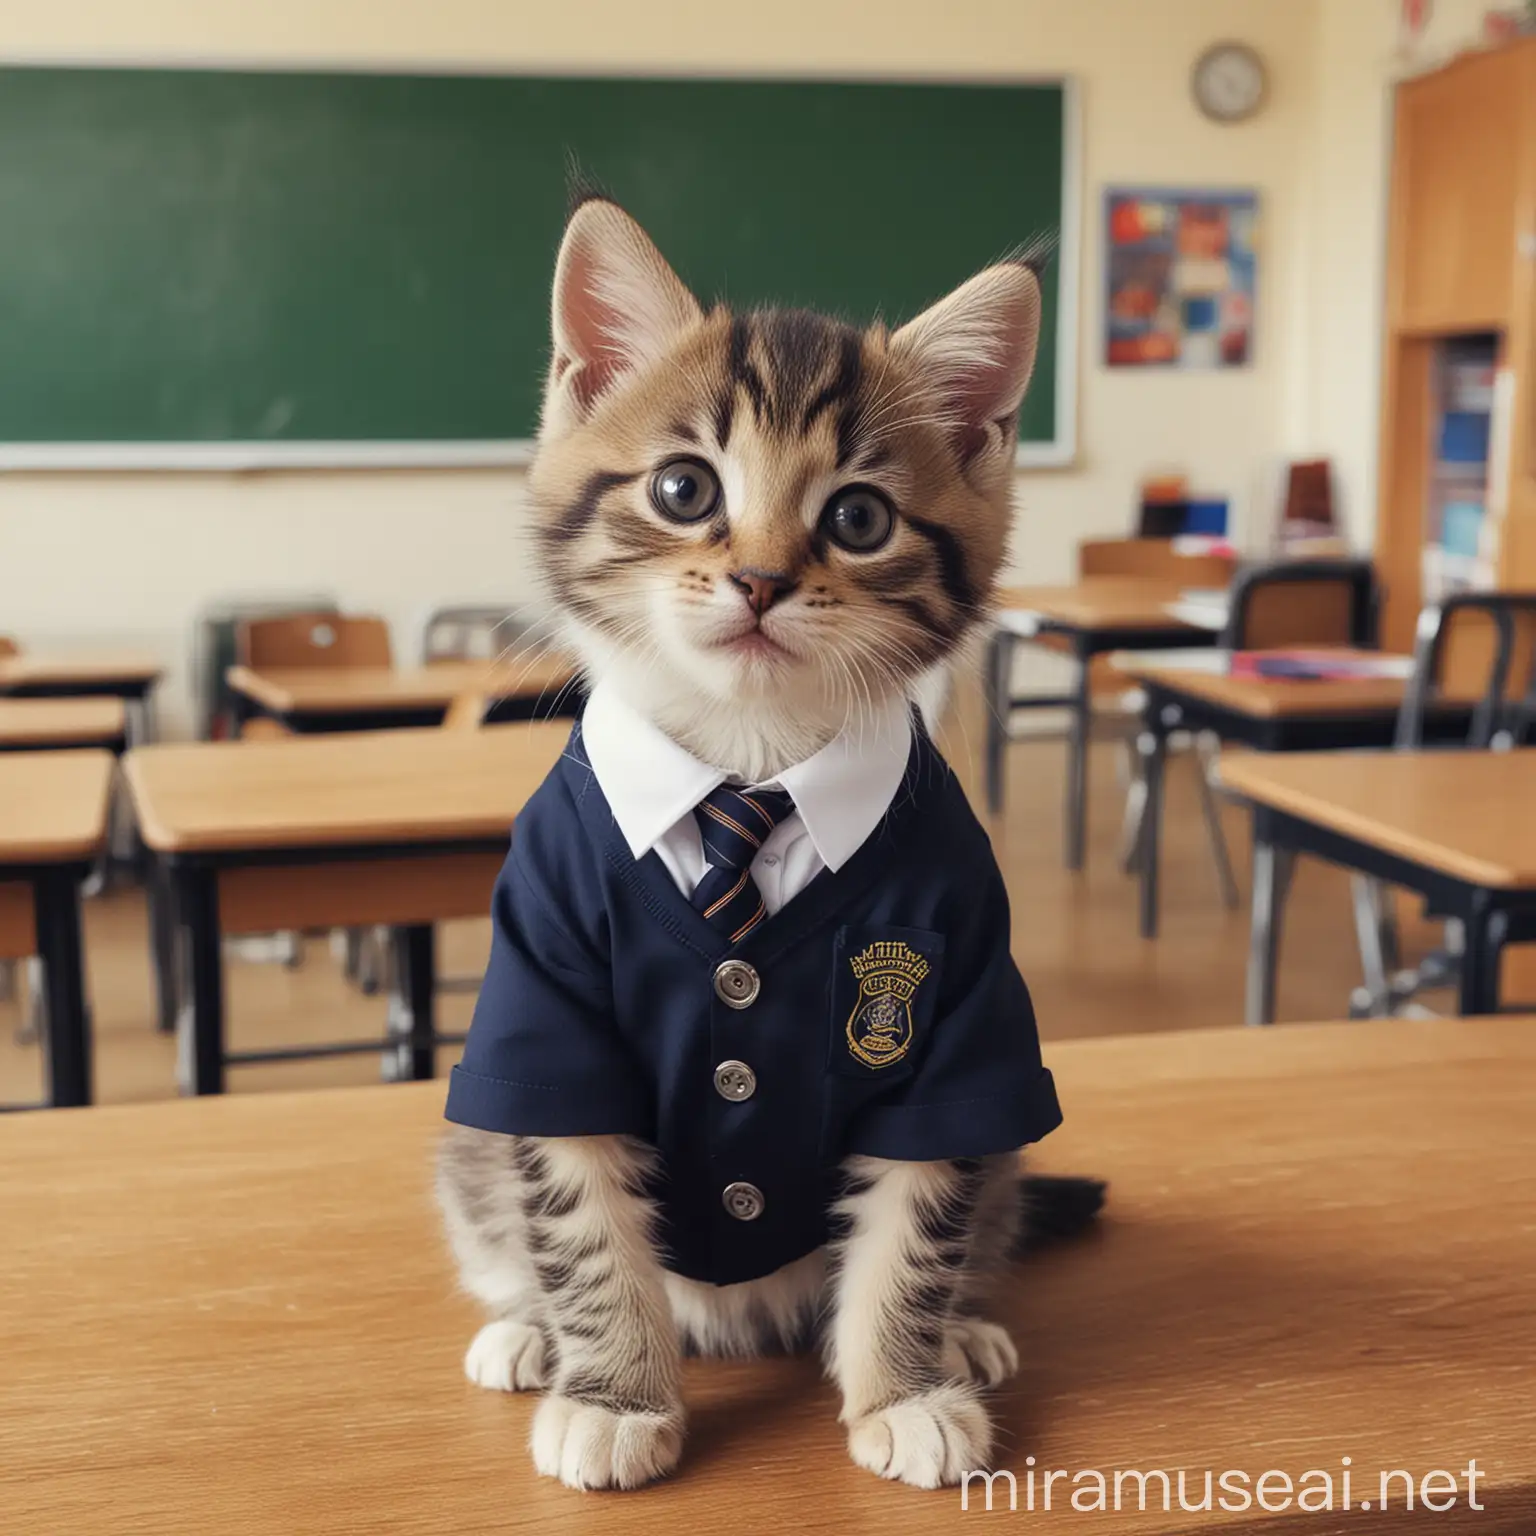 Adorable Kitten in School Uniform Getting Ready for Class